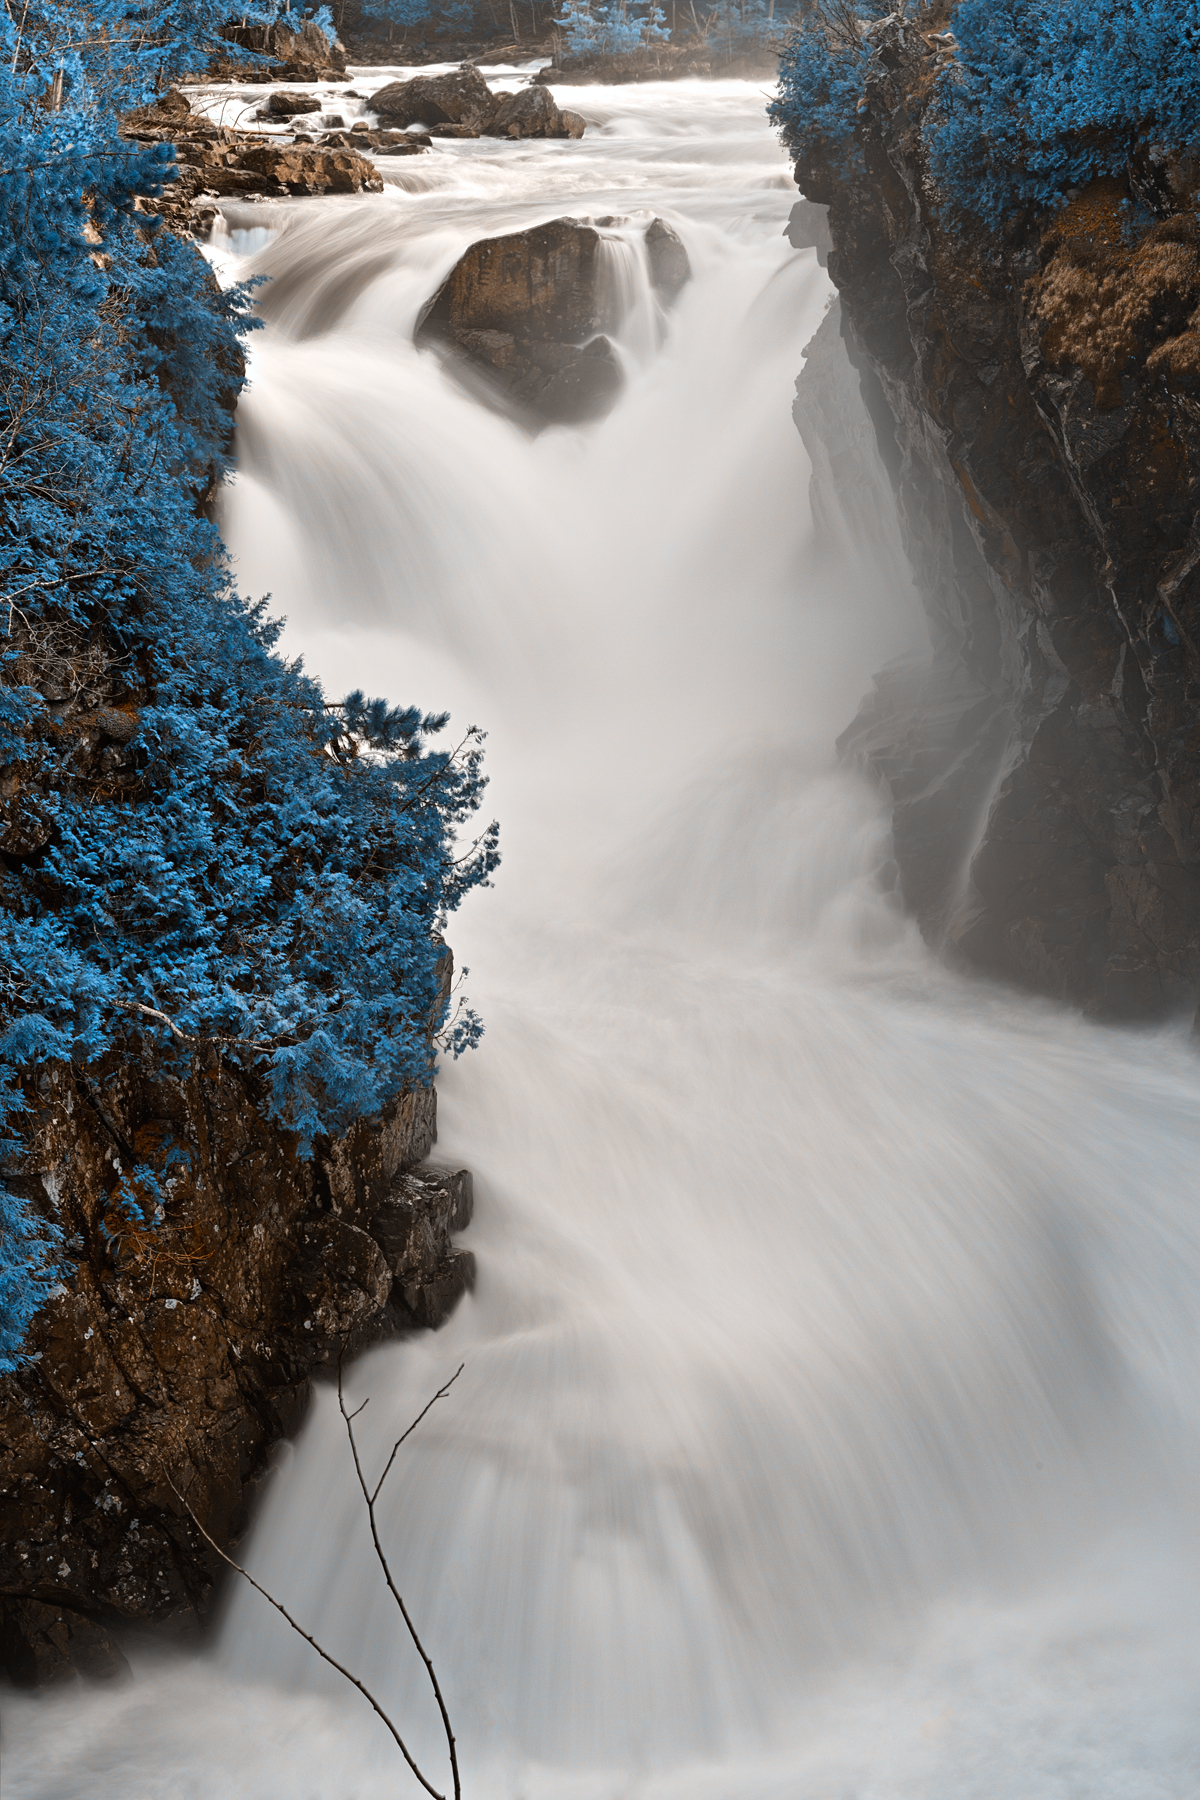 Blue dorwin falls - hdr photo